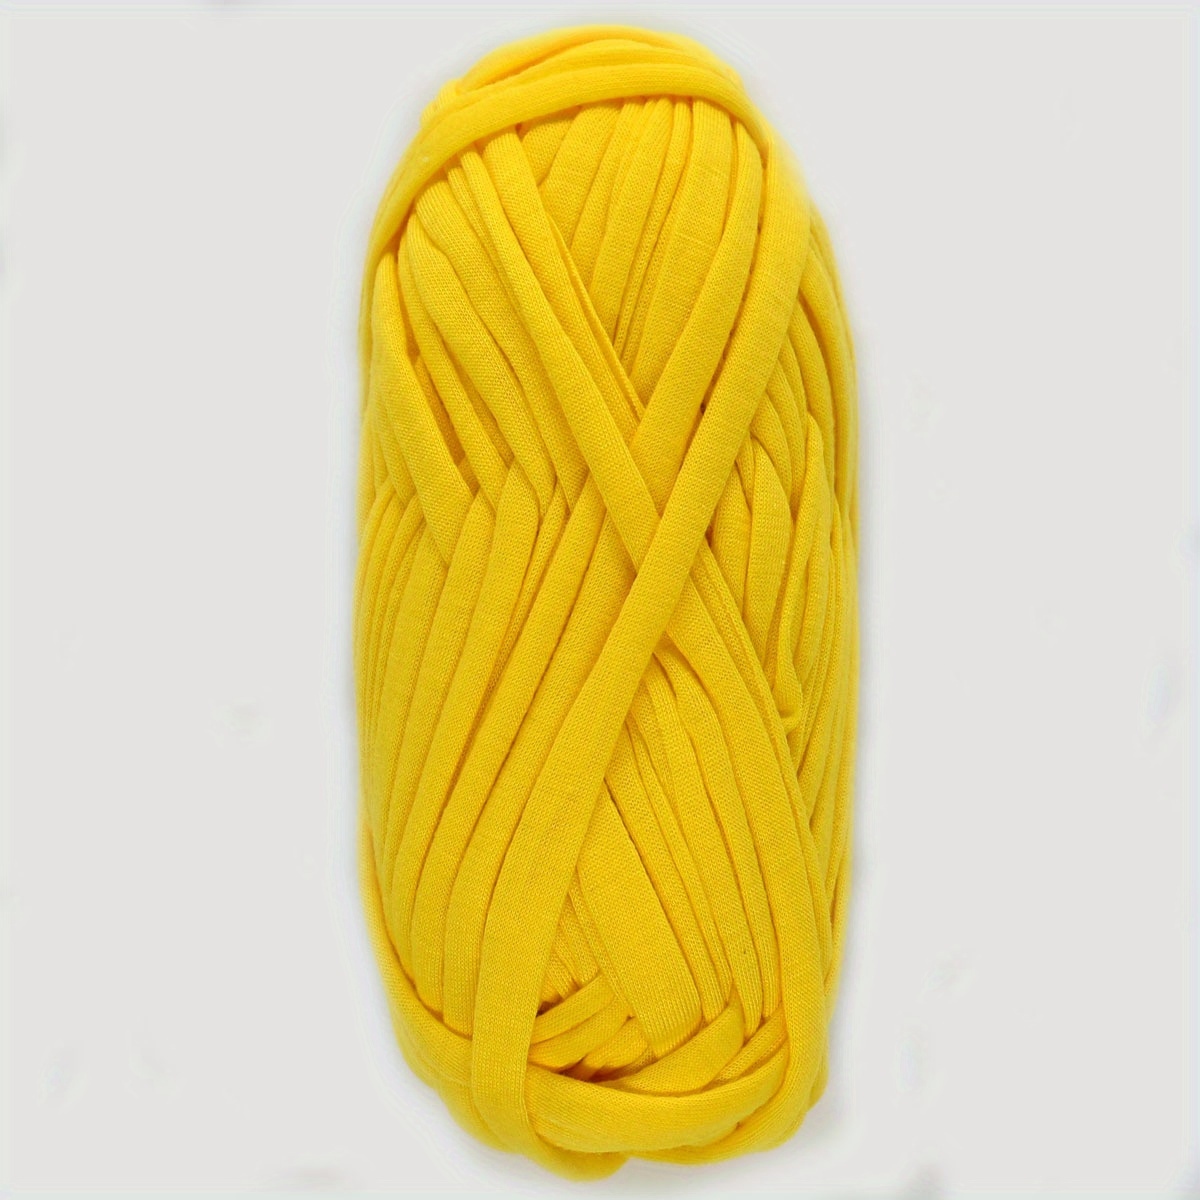 Thick and Thin Yarn, Yellow Yarn, Crochet Chunky Yarn, Bulky Yarn, Crochet  Yarn, Knitting Wool, Gold Yarn, Hand Dyed Merino Yarn for Weaving 